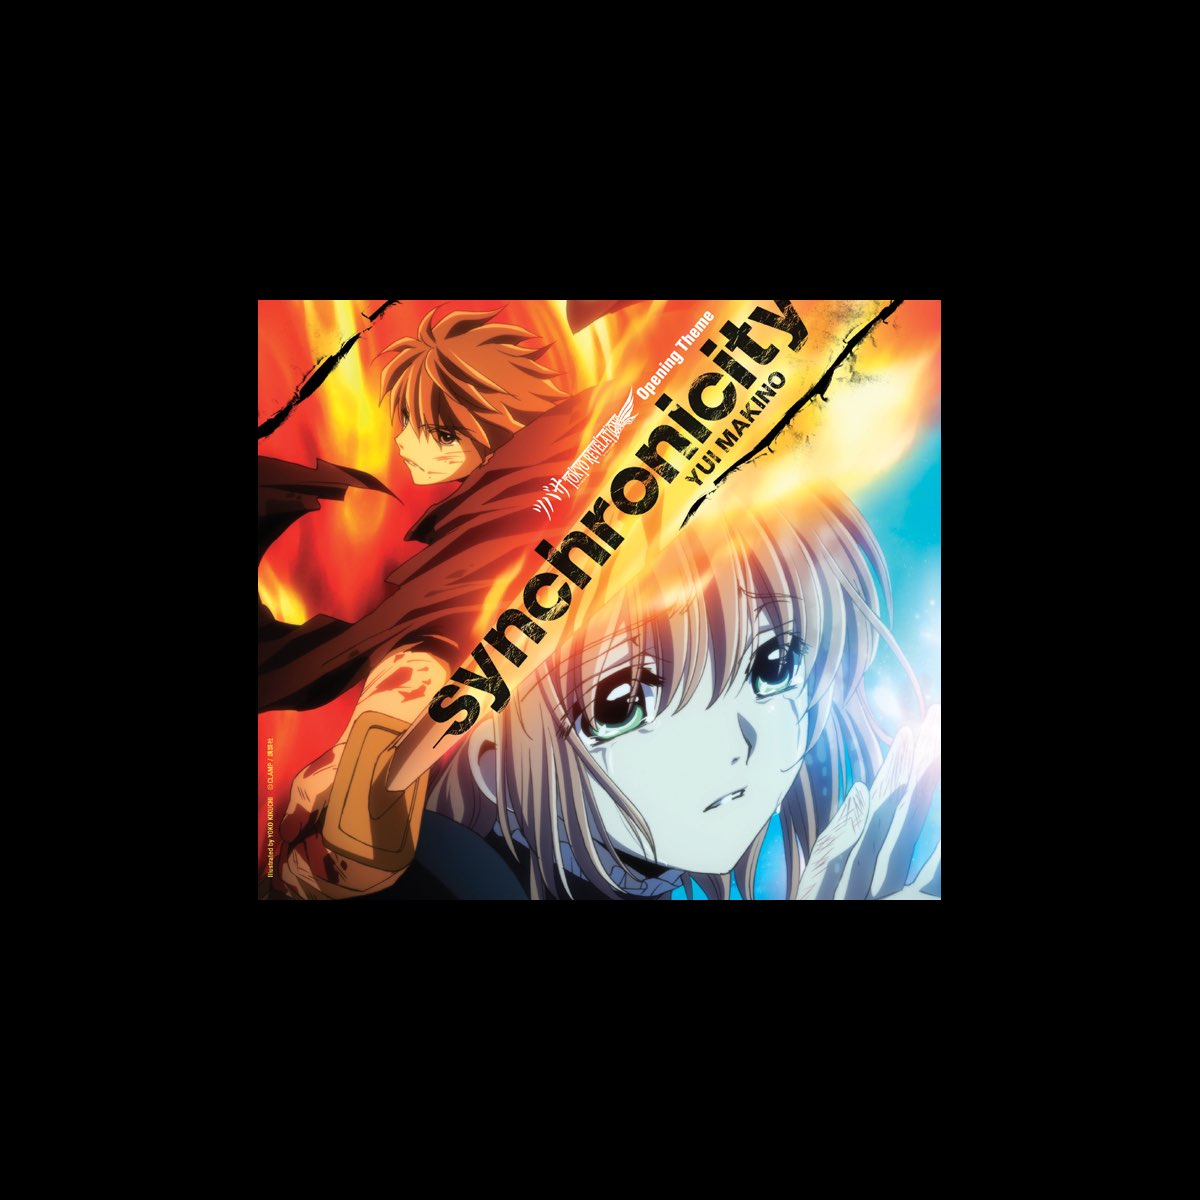 Rin and Len synchronicity | Anime, Anime images, Vocaloid